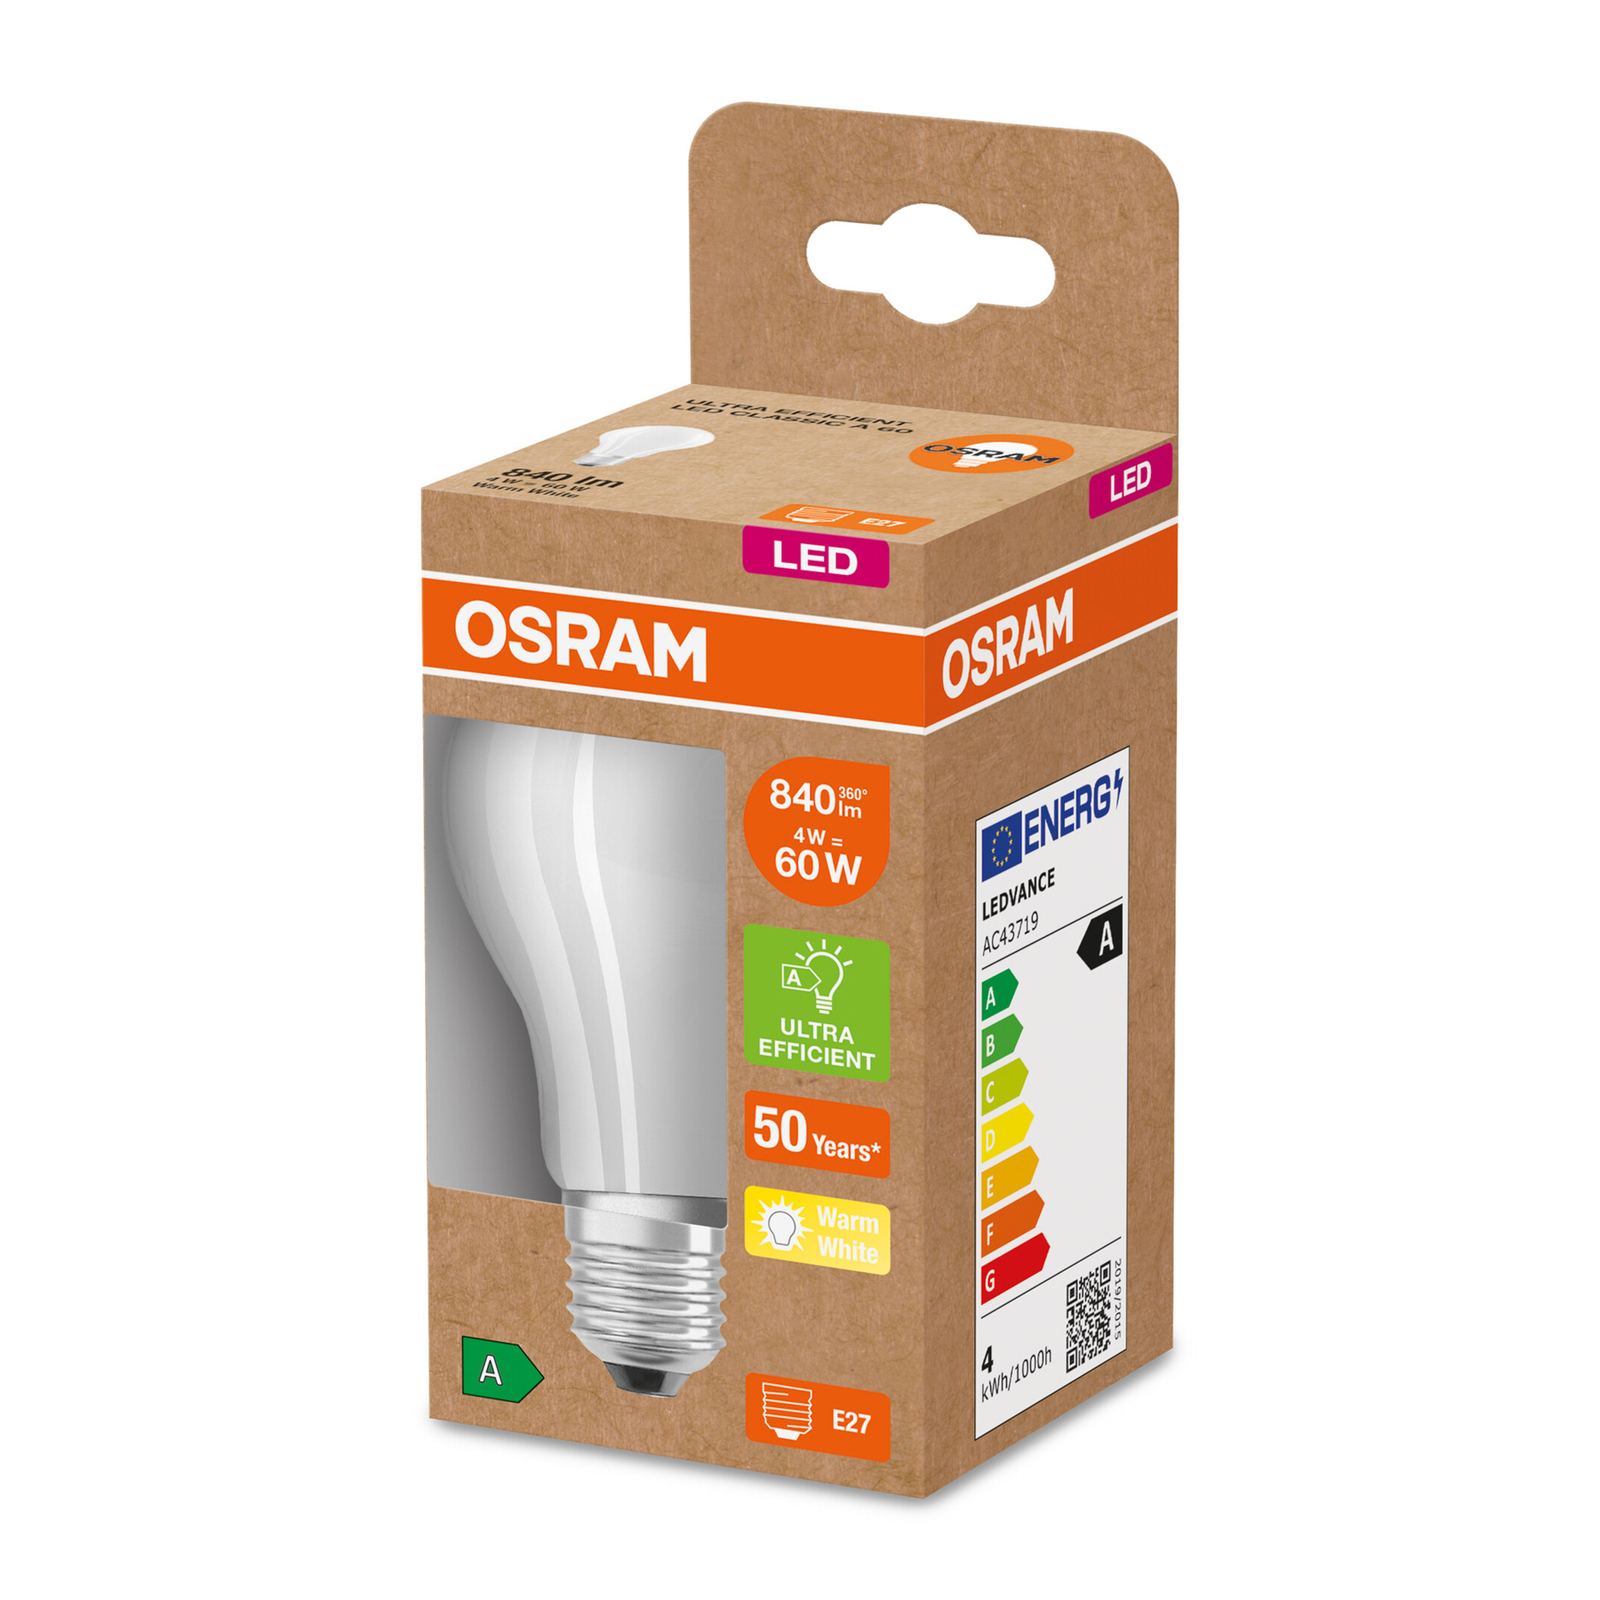 OSRAM LED lamp E27 A60 3,8W 840lm 3000K matt